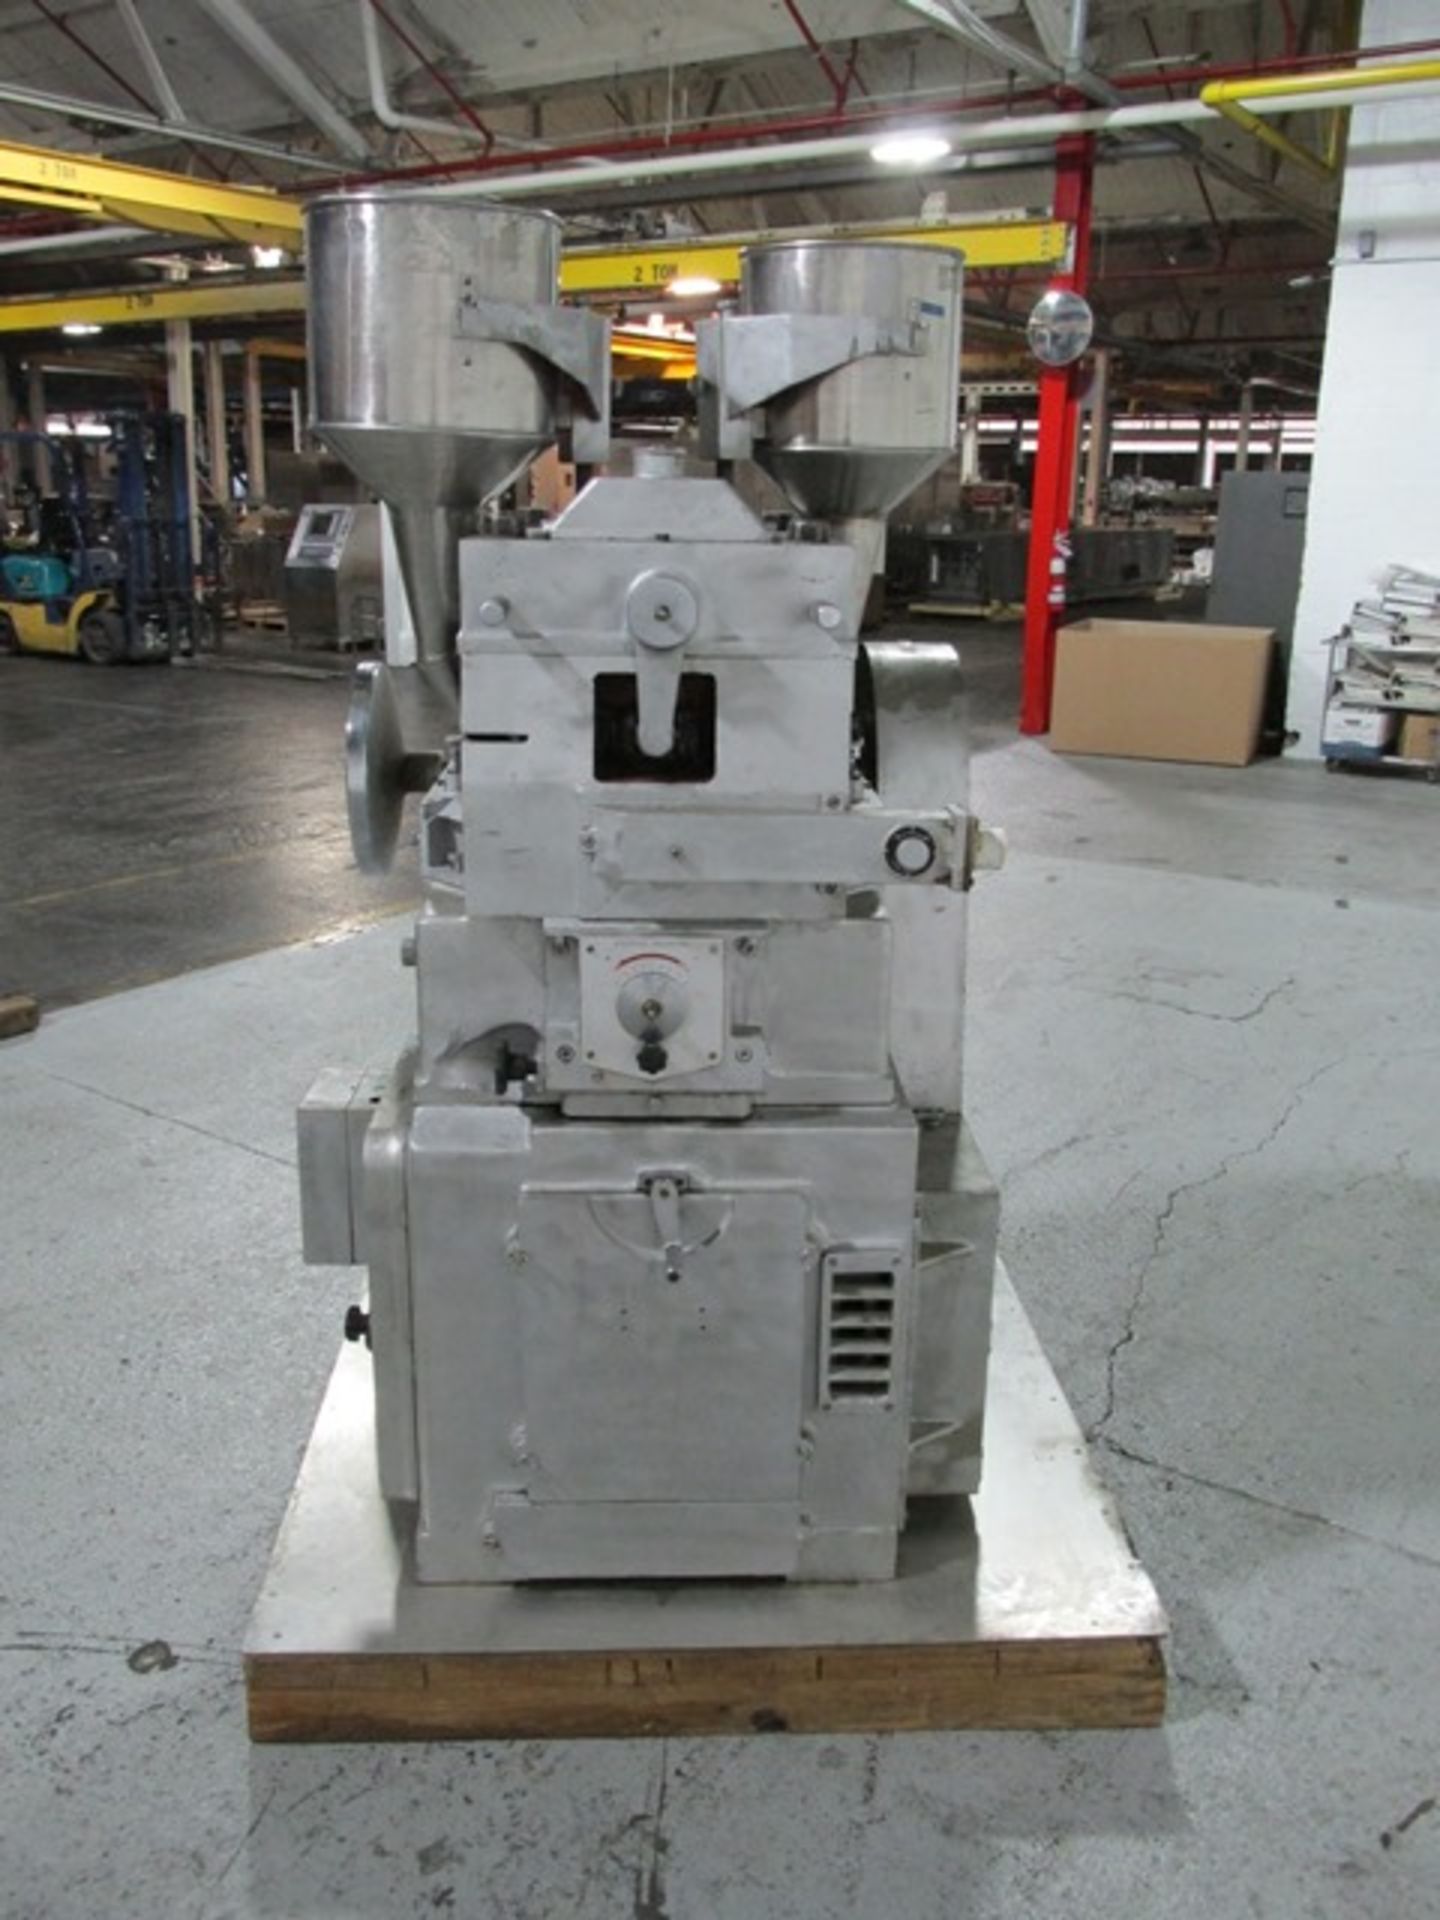 ZP rotary tablet press, model ZP37, 37 station - Image 3 of 11